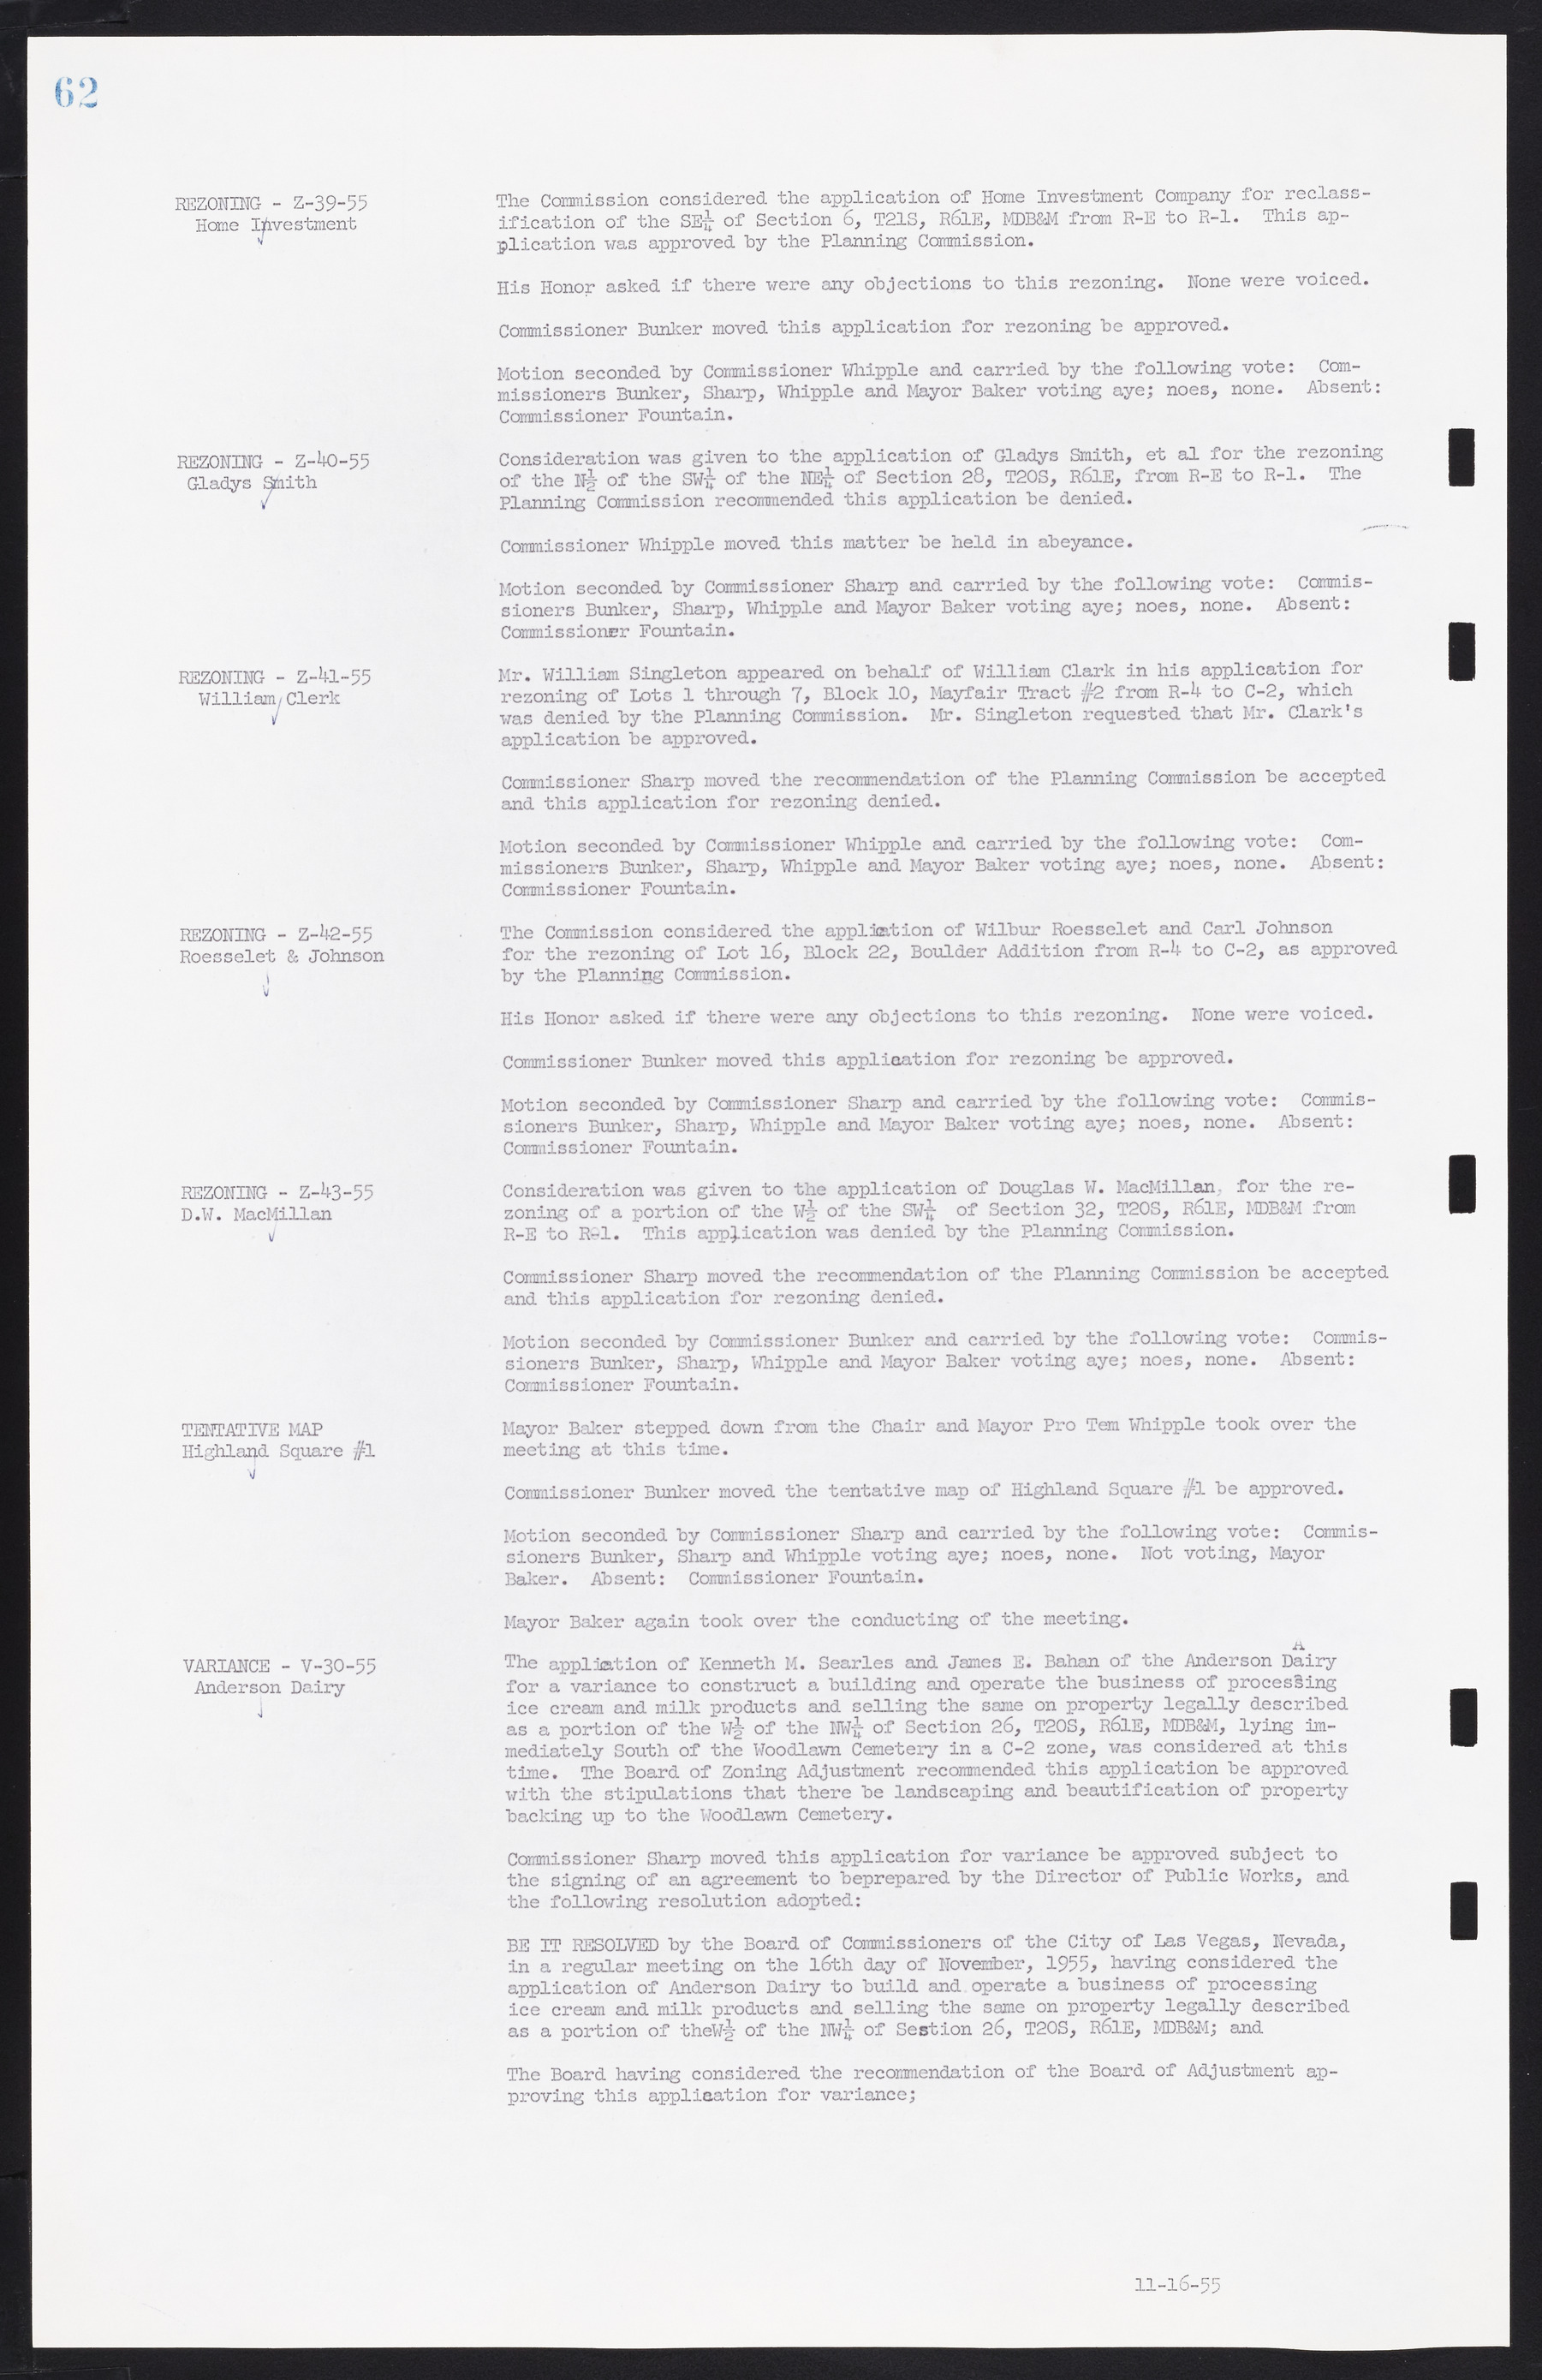 Las Vegas City Commission Minutes, September 21, 1955 to November 20, 1957, lvc000010-70